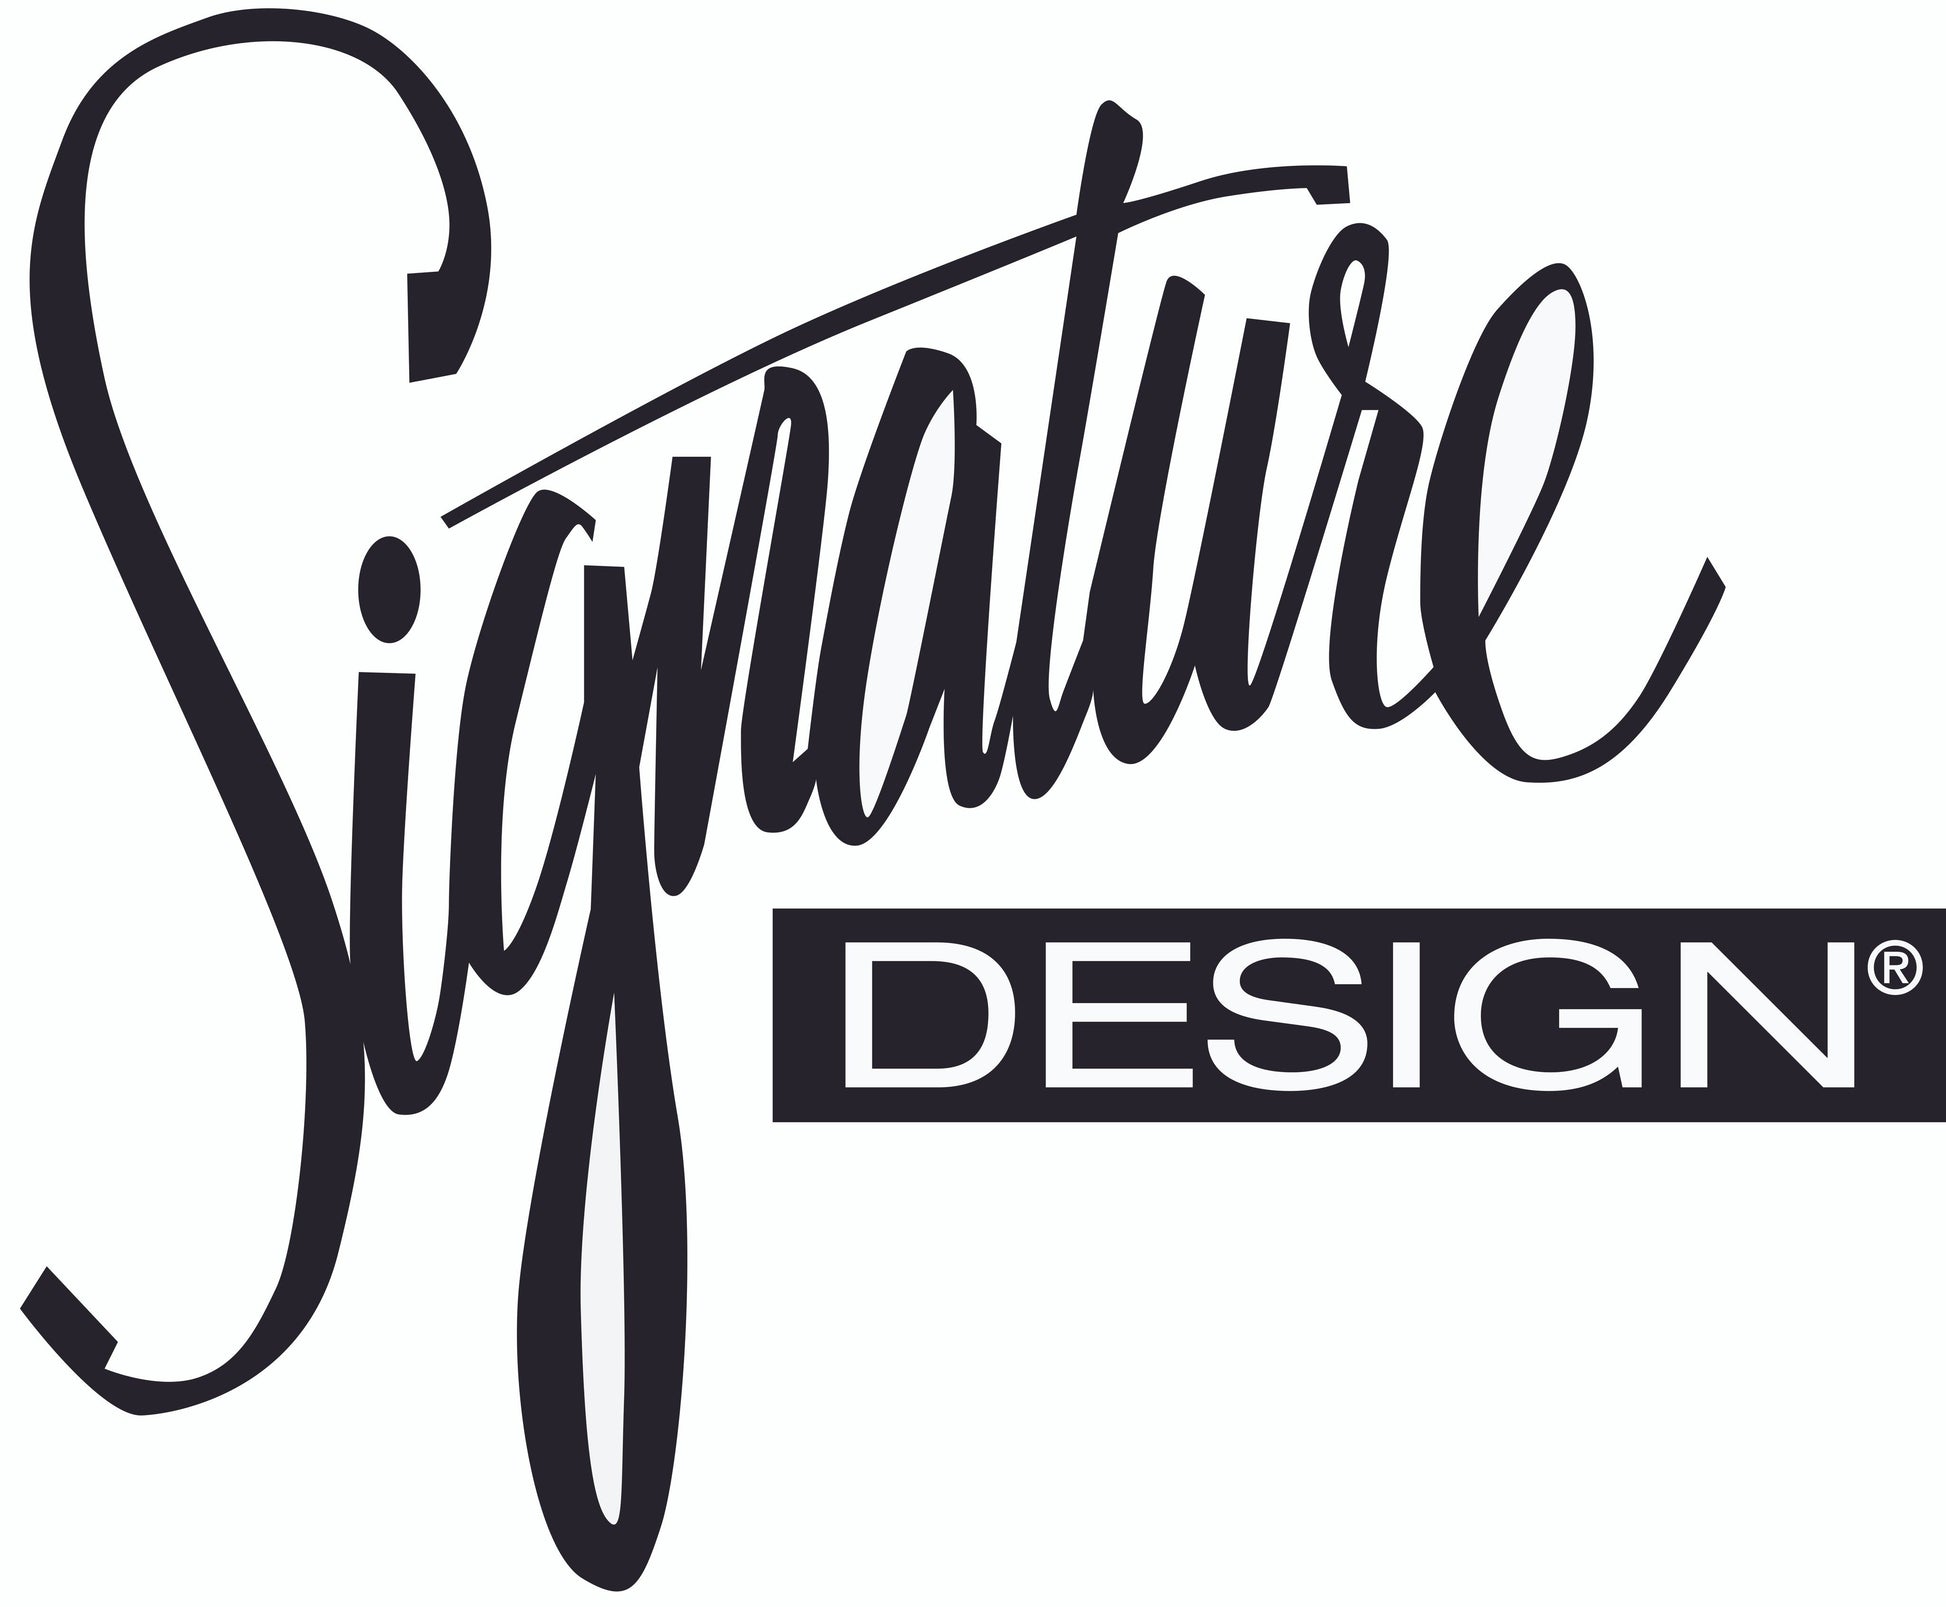 Isanti Rectangular End Table Signature Design by Ashley®